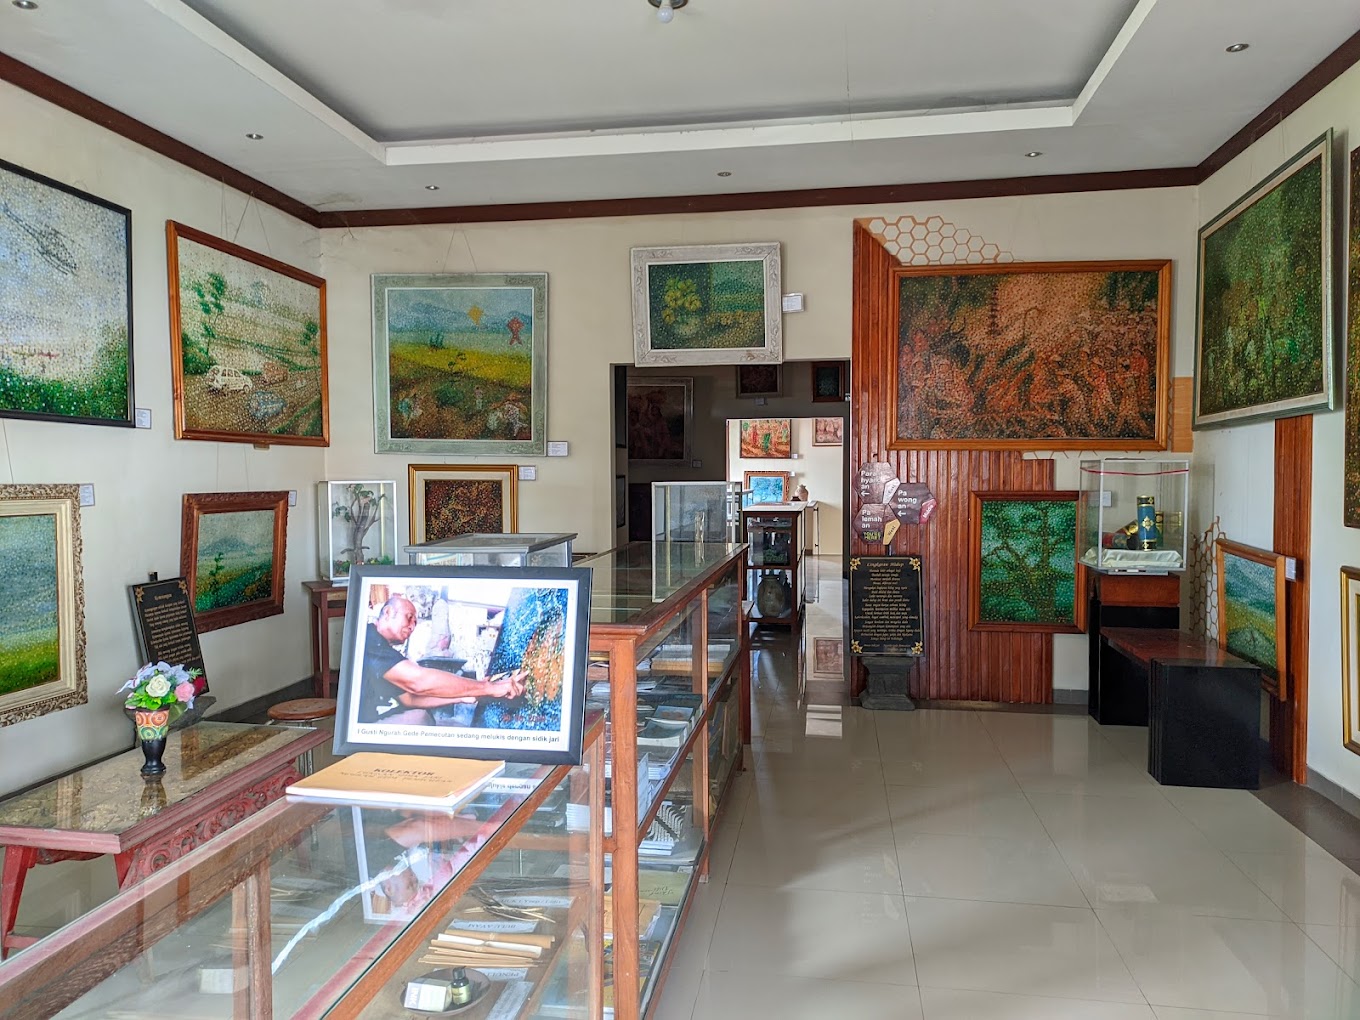 Daya Tarik Objek Wisata Museum Lukisan Sidik Jari di Denpasar Selatan Bali